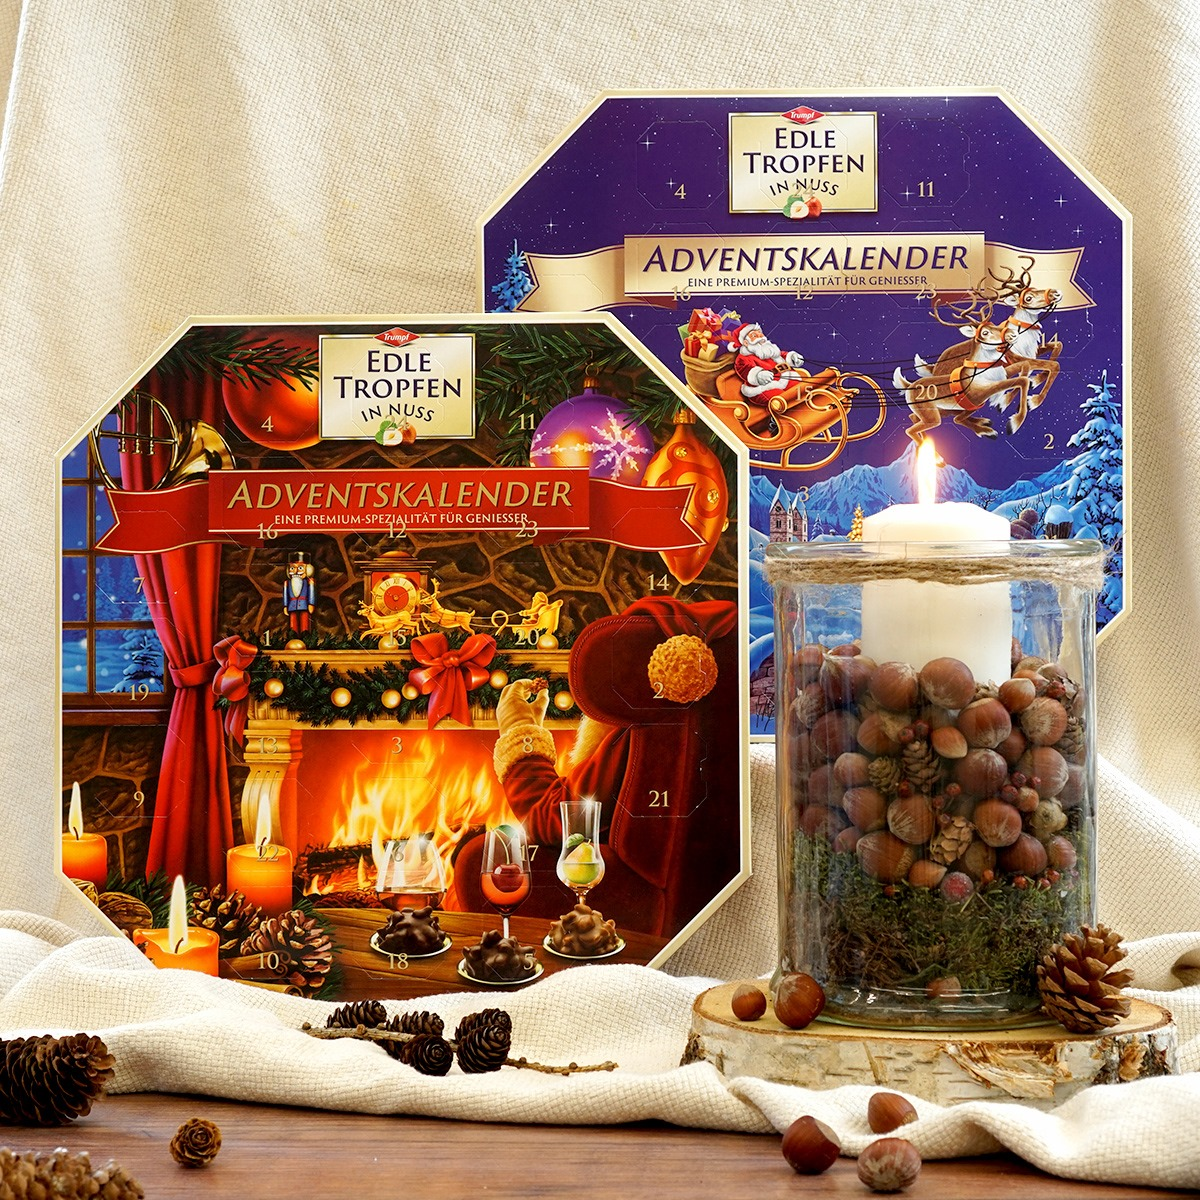 Gingerbread World European Christmas Market - Unique Advent Calendars with European Chocolate Treats